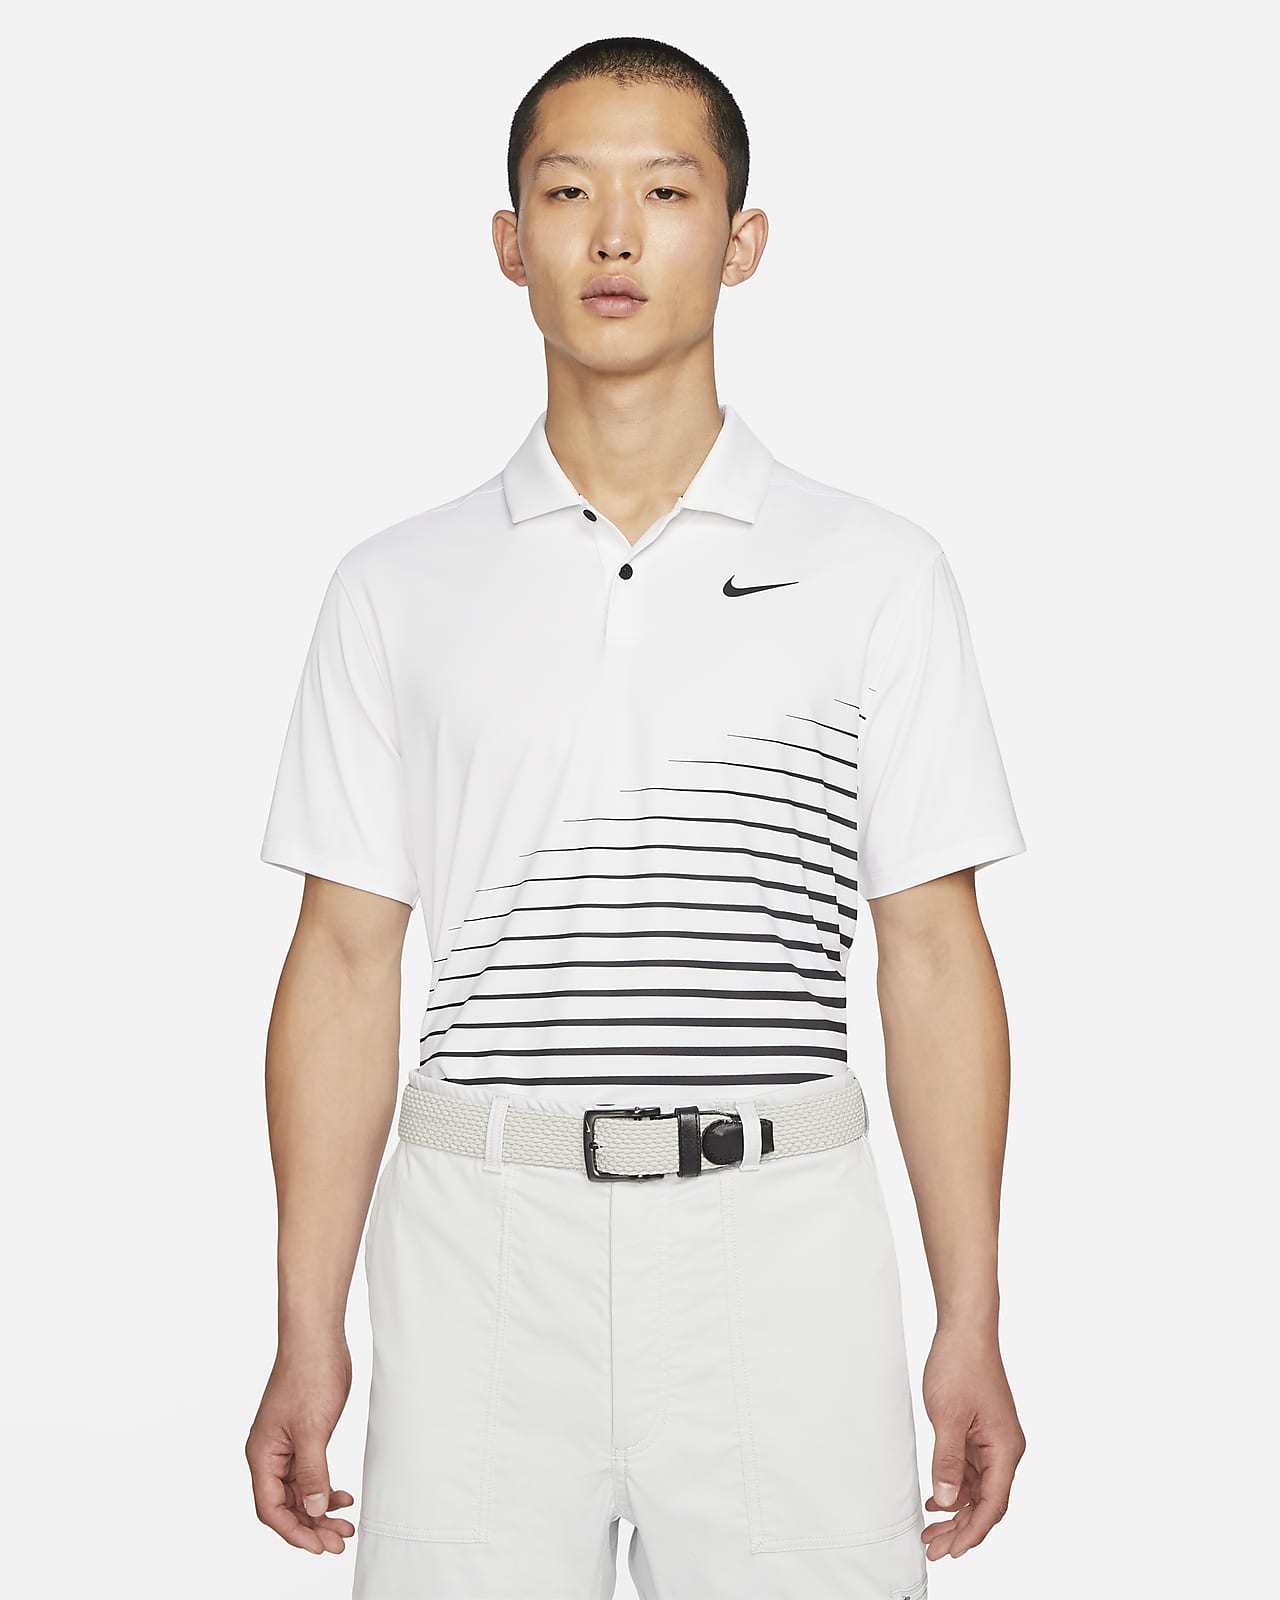 Nike Dri-FIT Vapor Men's Graphic Golf Polo